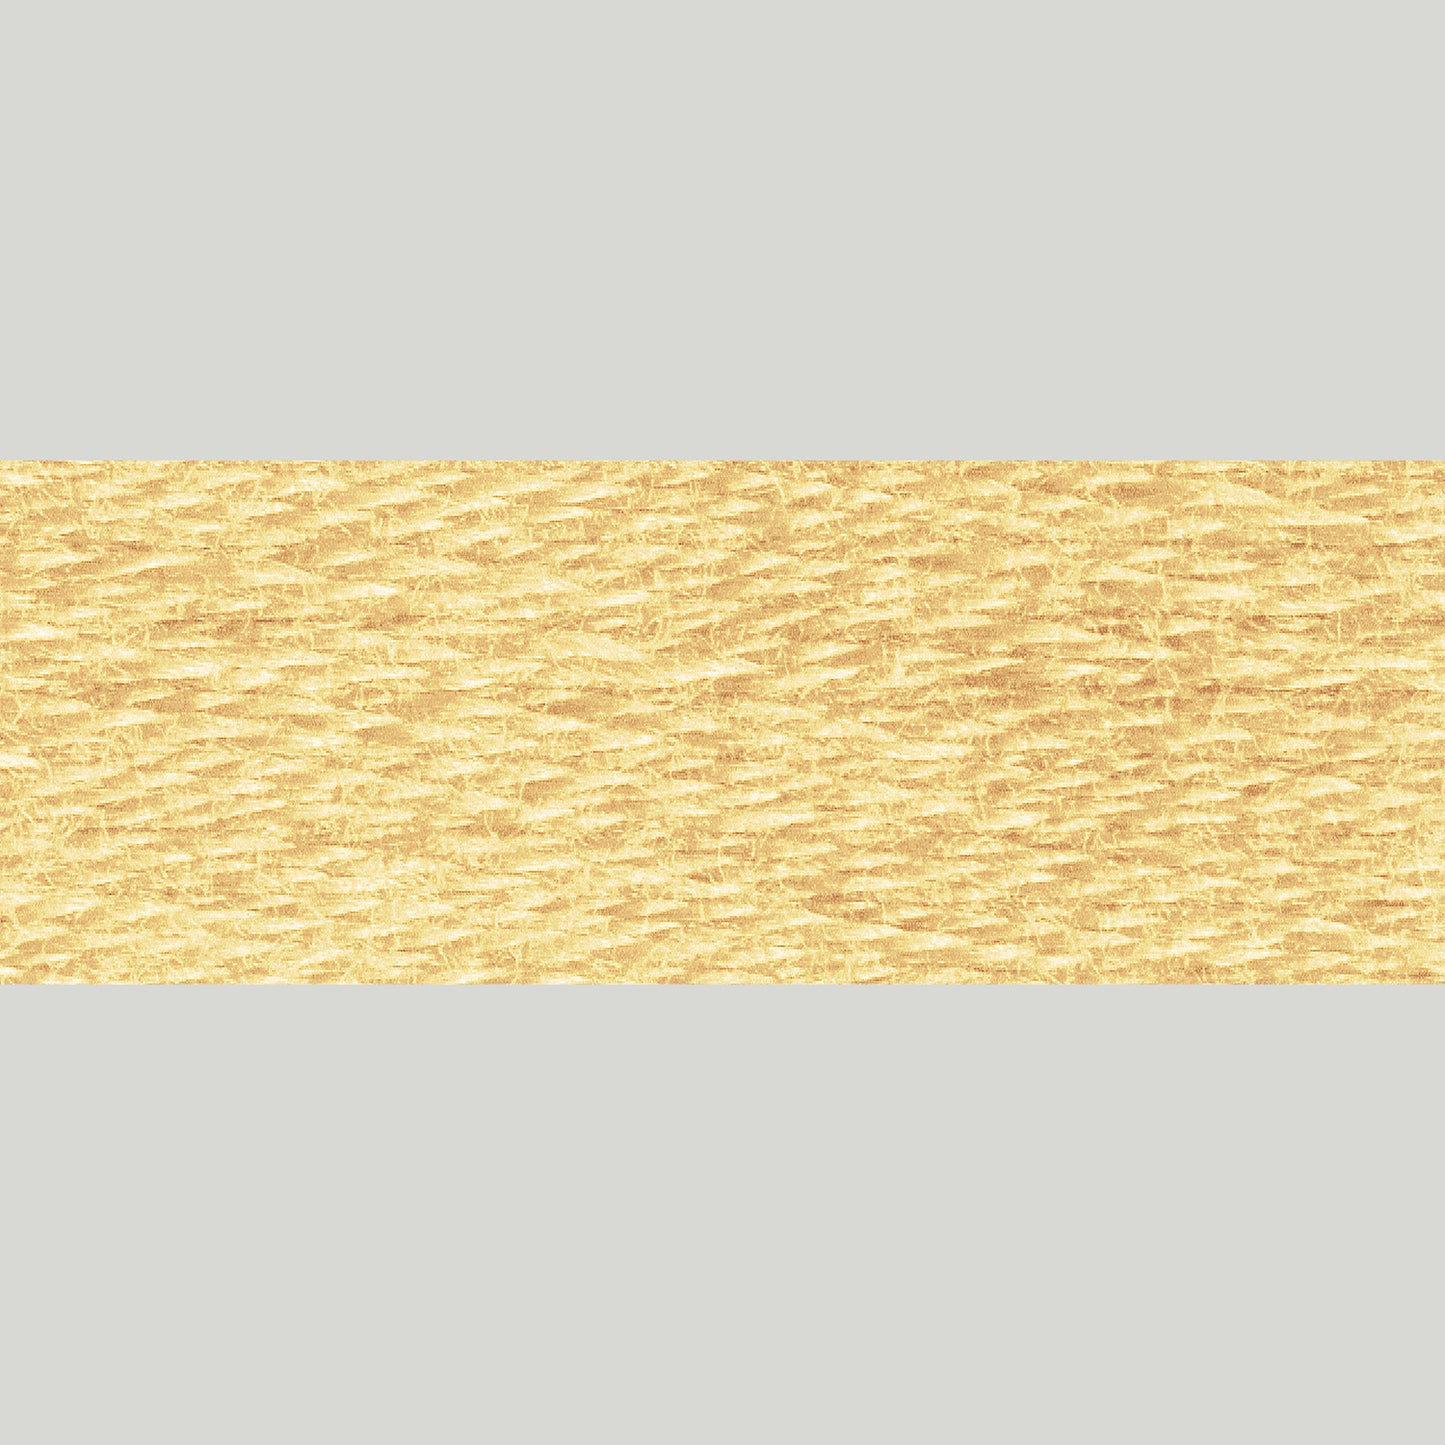 DMC Embroidery Floss - 3046 Medium Yellow Beige Alternative View #1